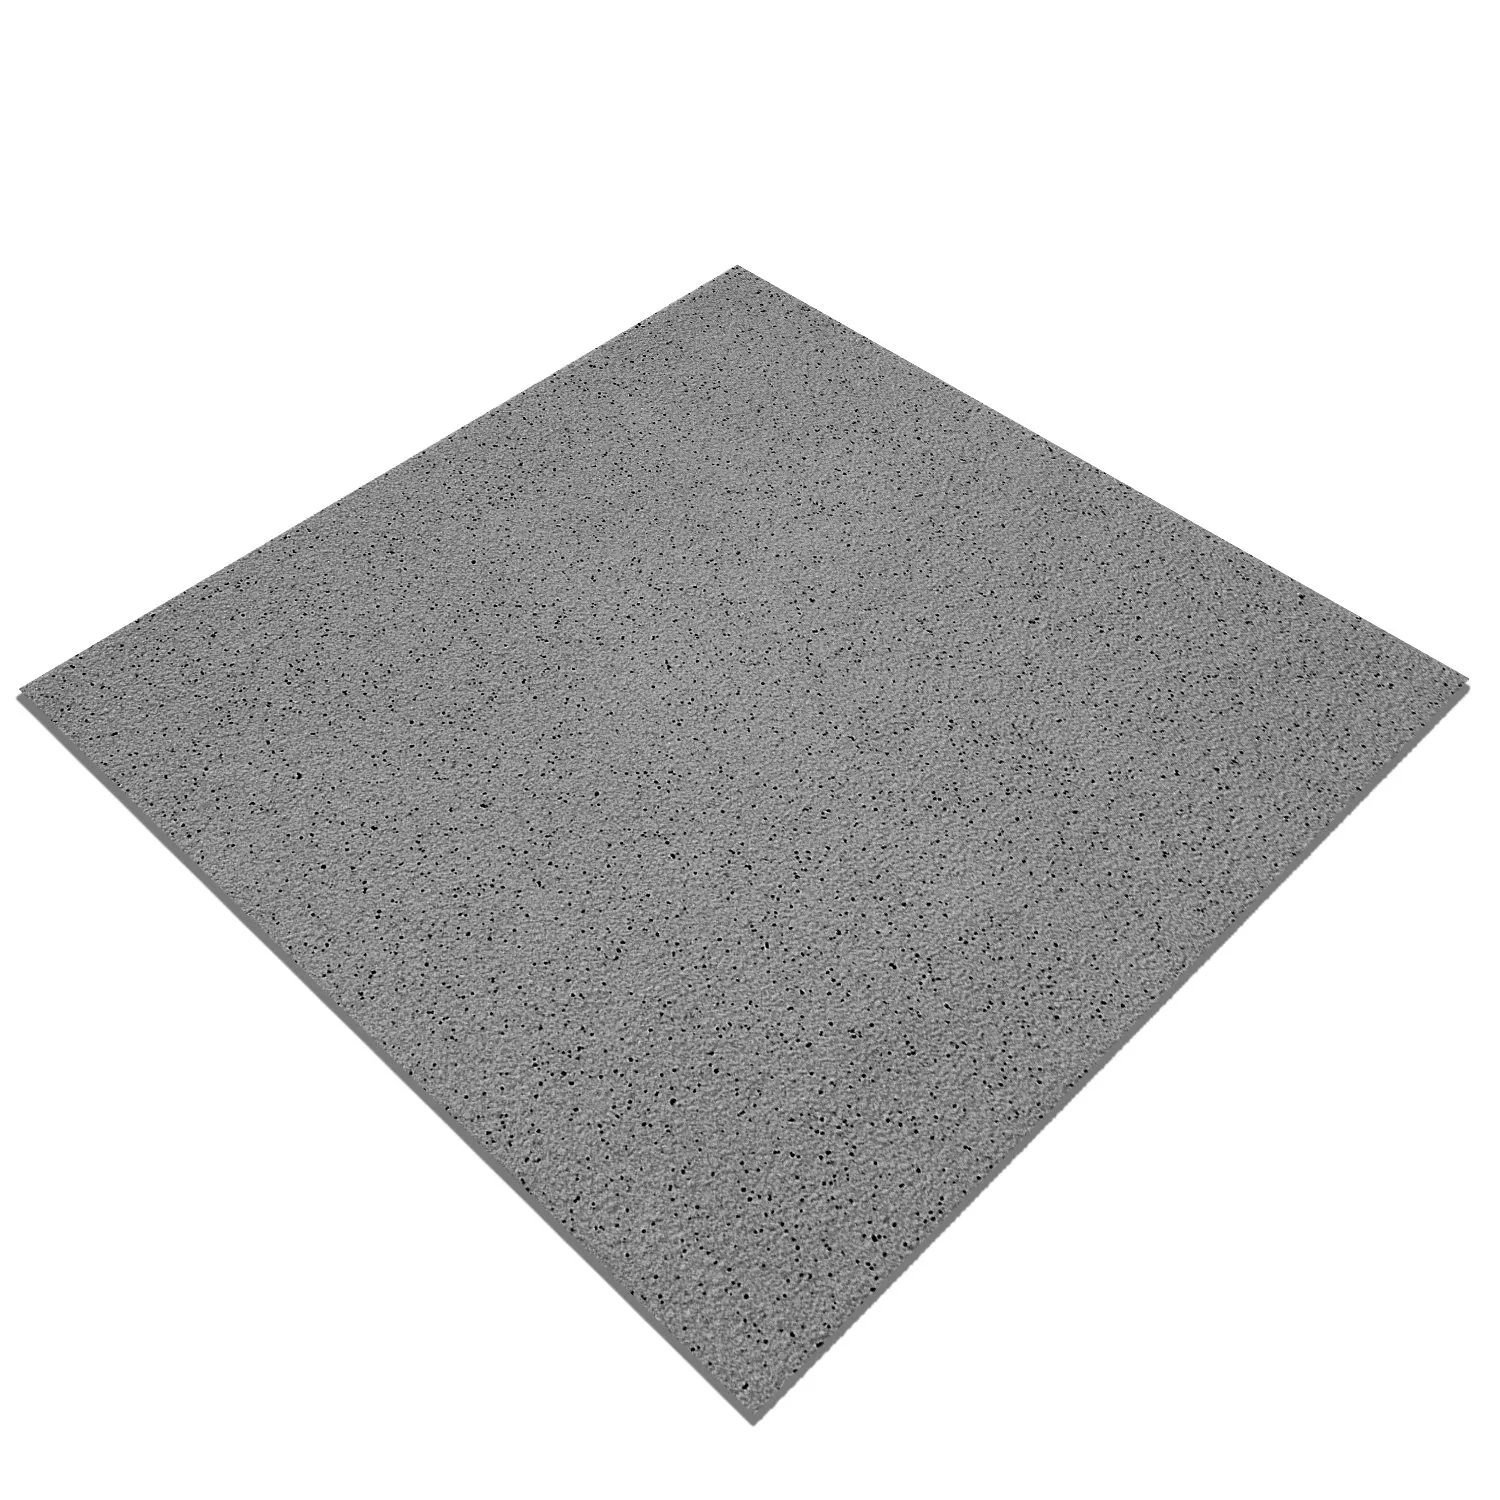 Gresie Grau Bun R10/A Antracit 15x15cm